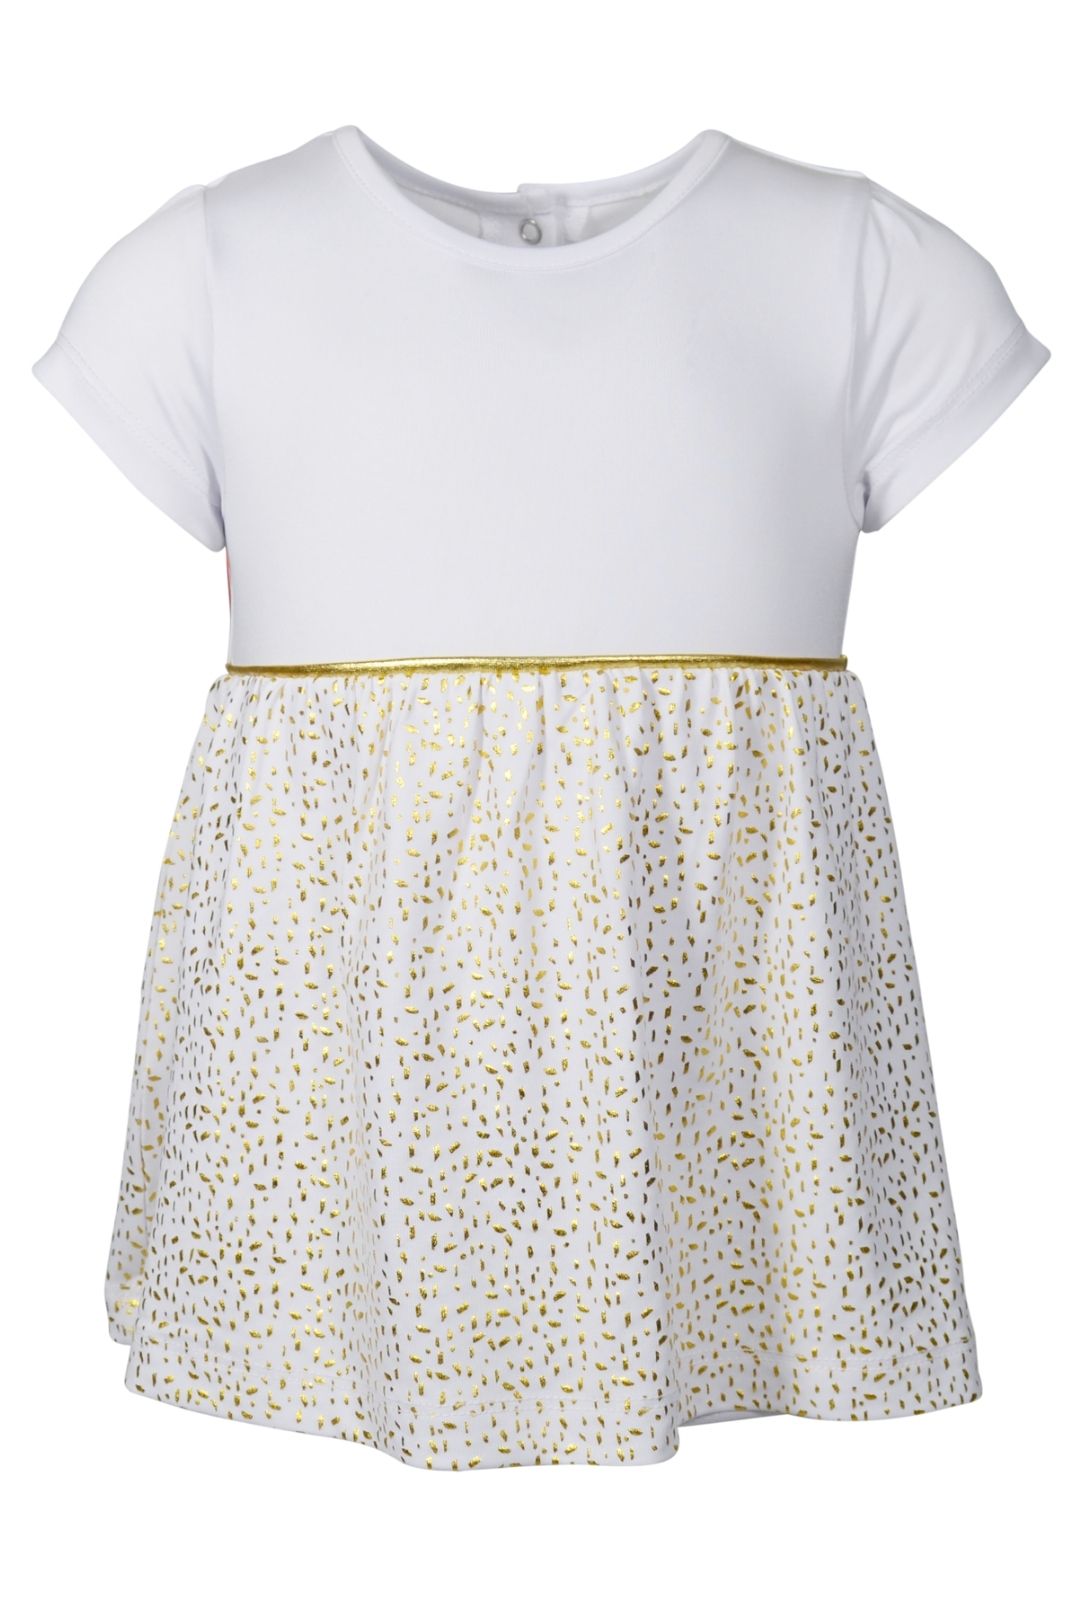 Kaylee Infant Girls' Dress